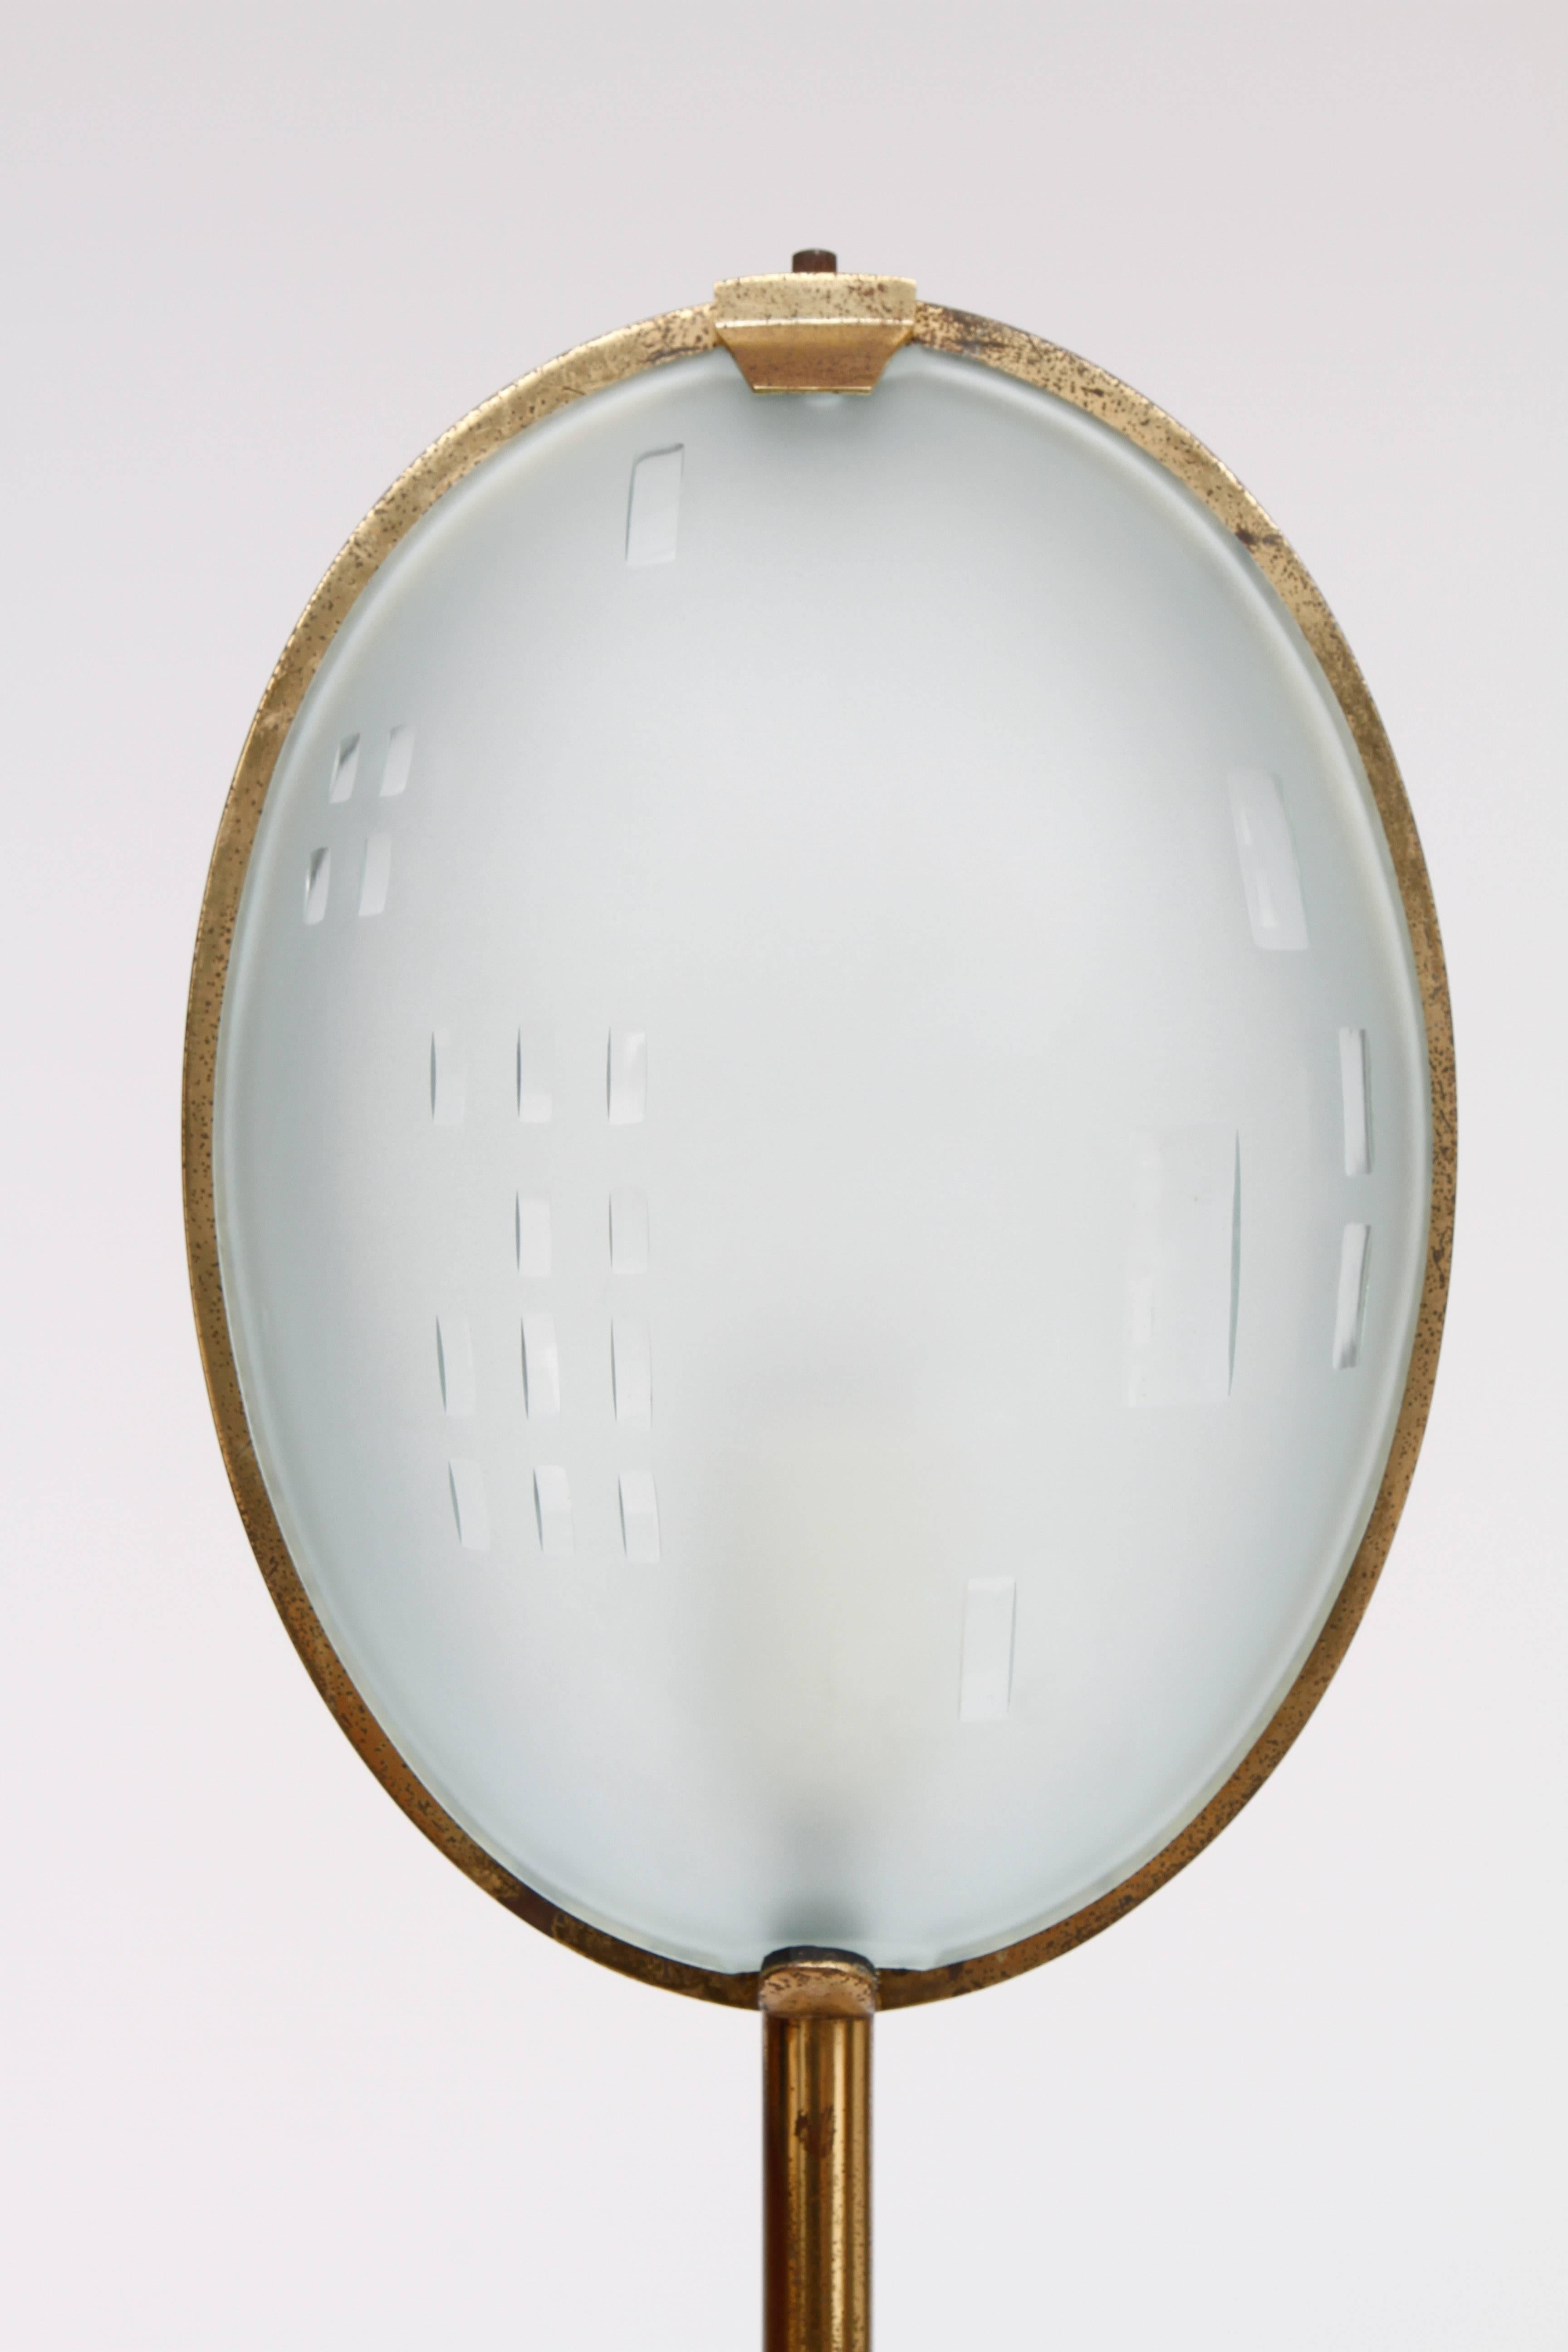 Glass Max Ingrand for Fontana Arte, Floor Lamp, circa 1960